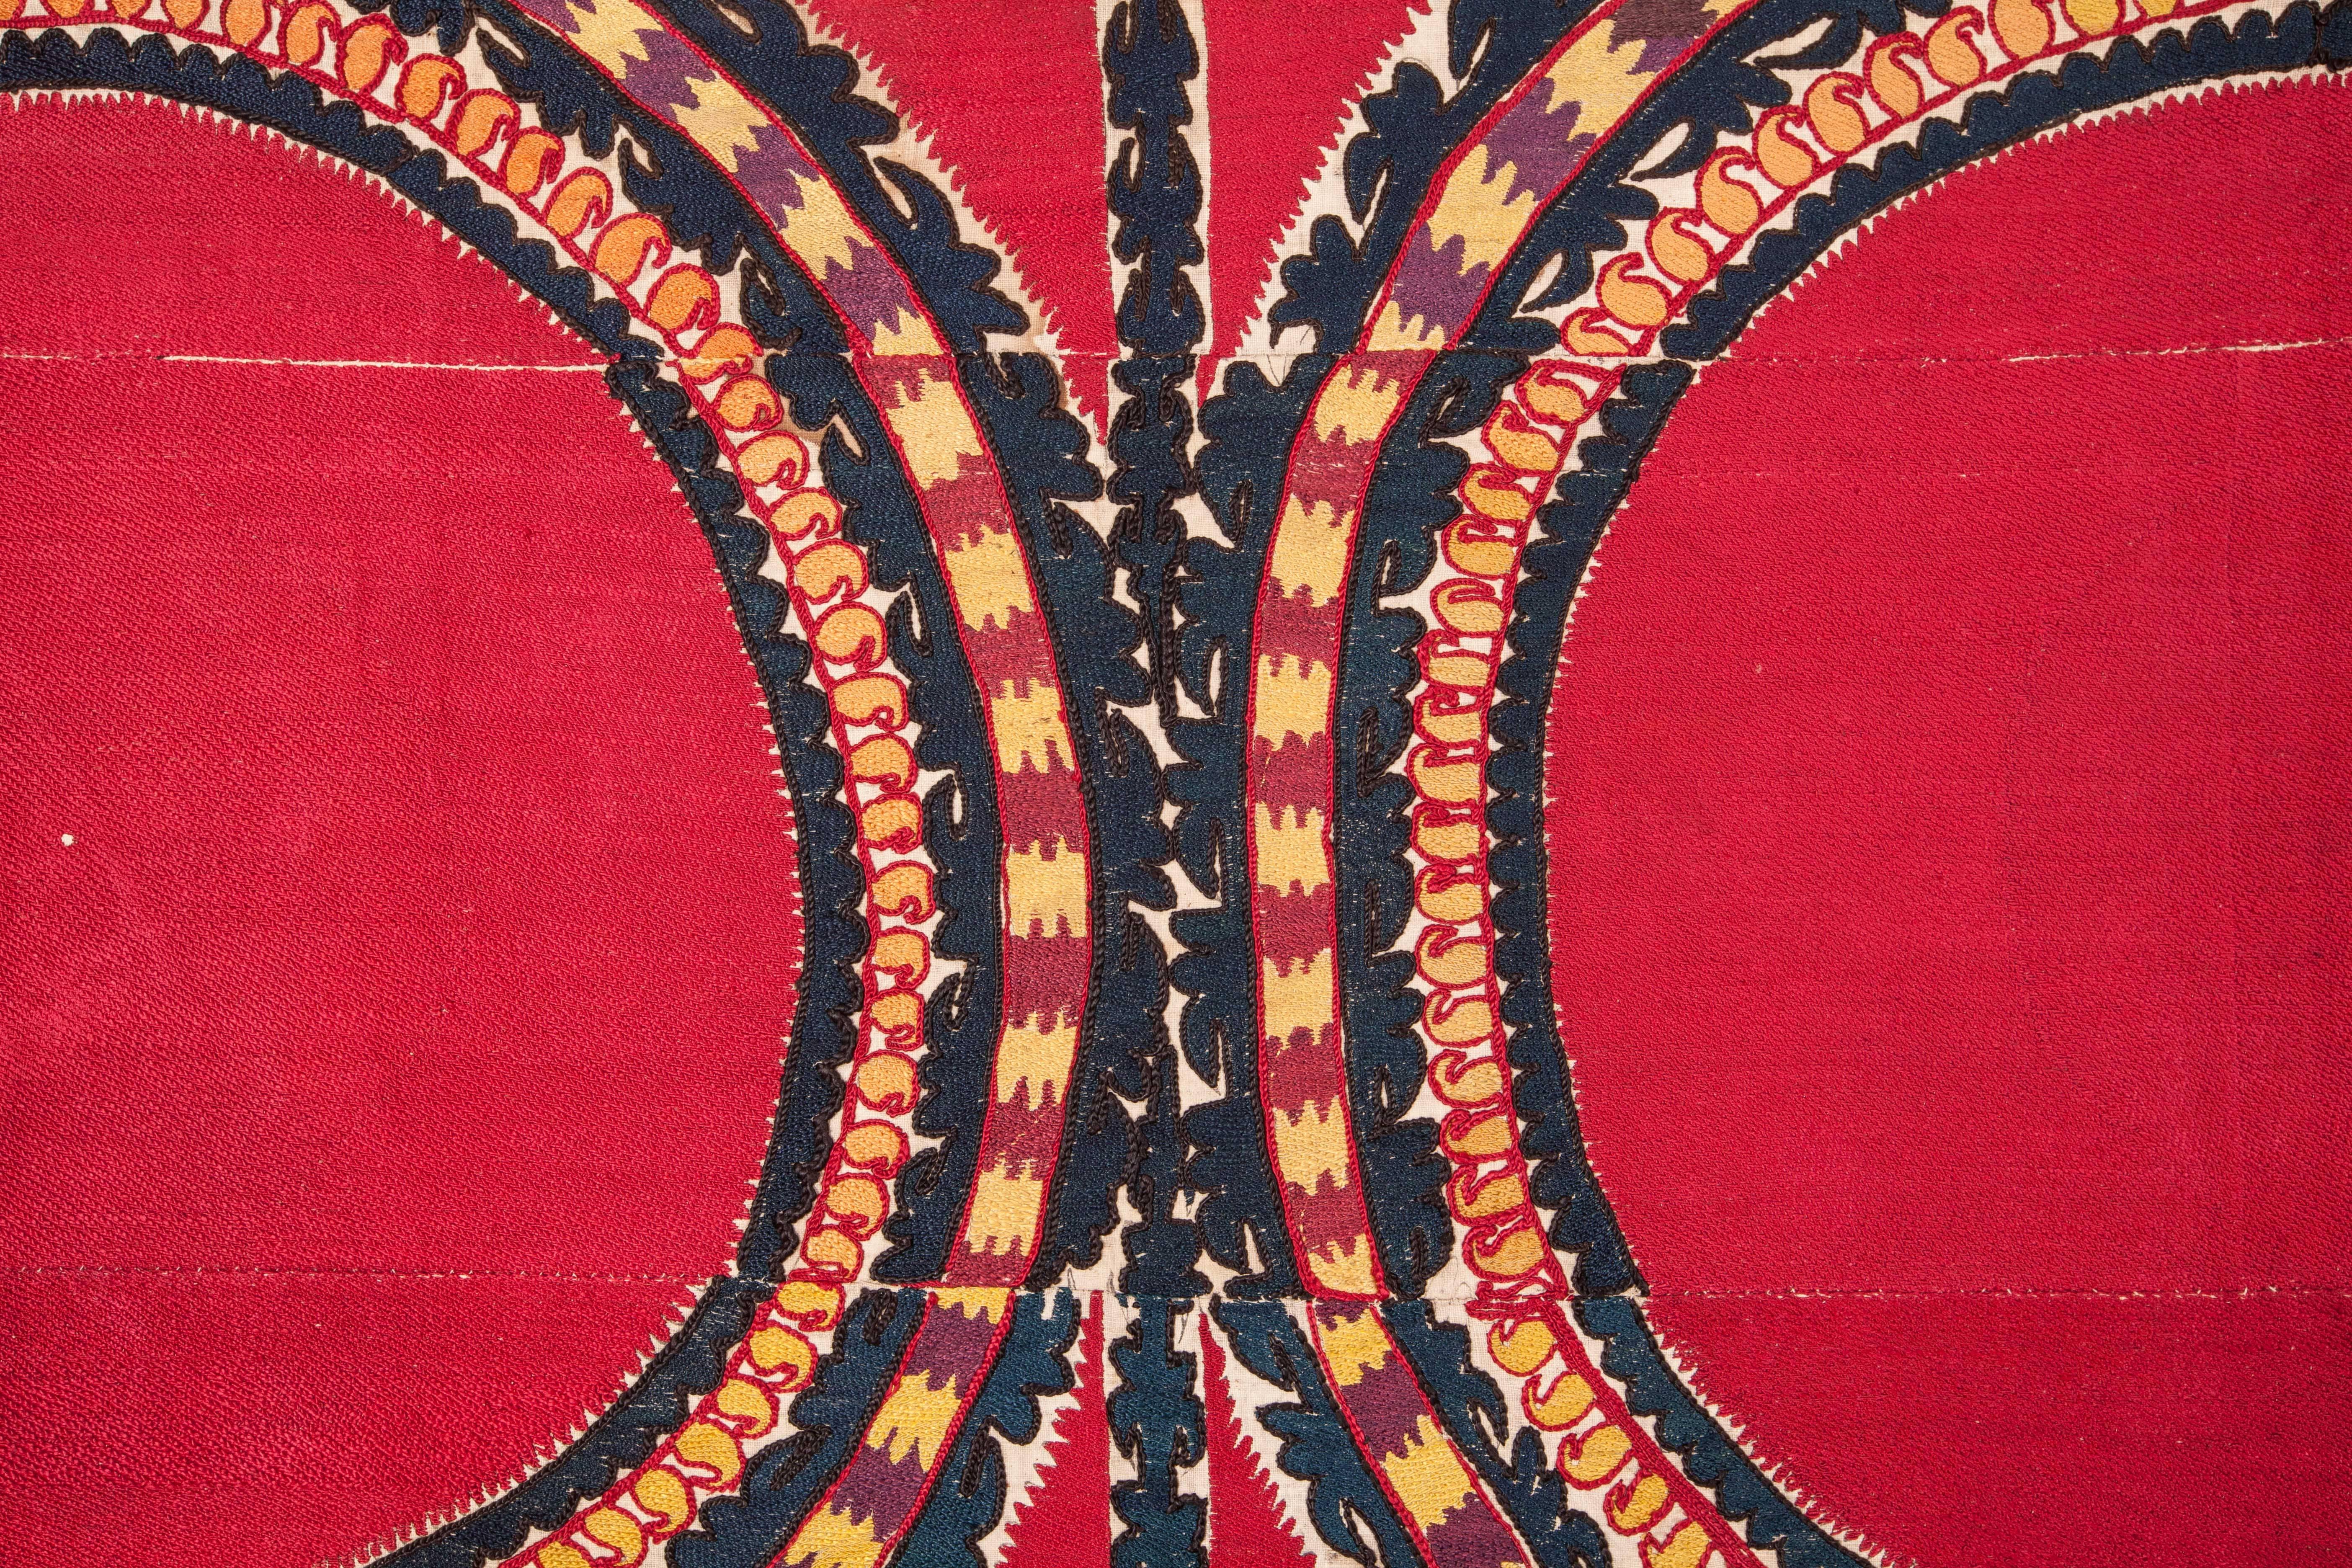 Embroidered Antique Central Asian Tashkent Suzani from Uzbekistan